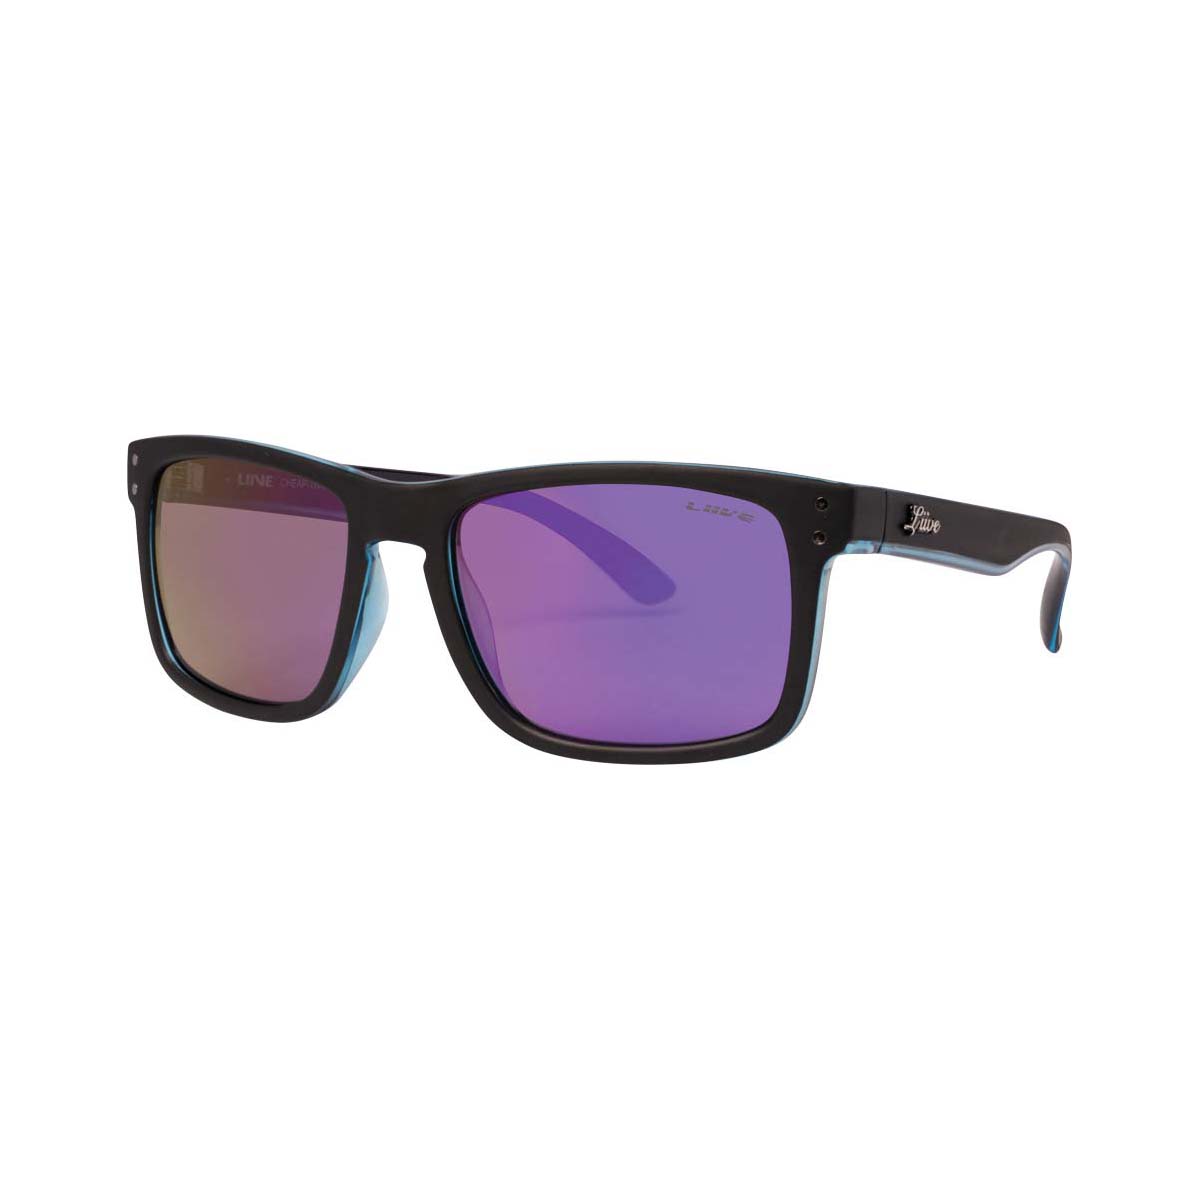 Liive Vision Men's Cheap Thrills Sunglasses